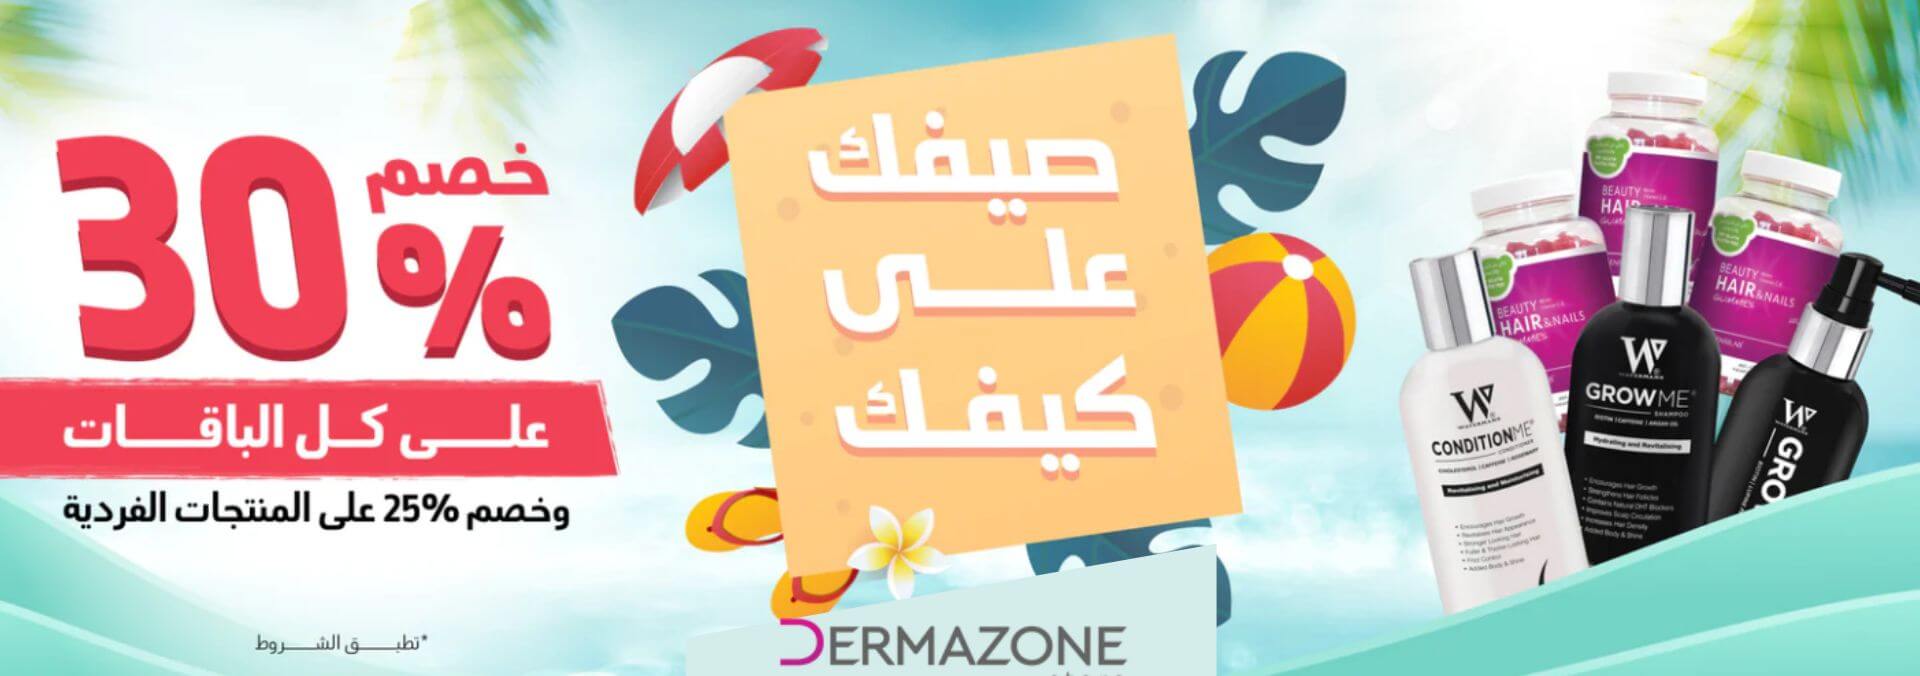 ديرمازون - Derma zone Banner